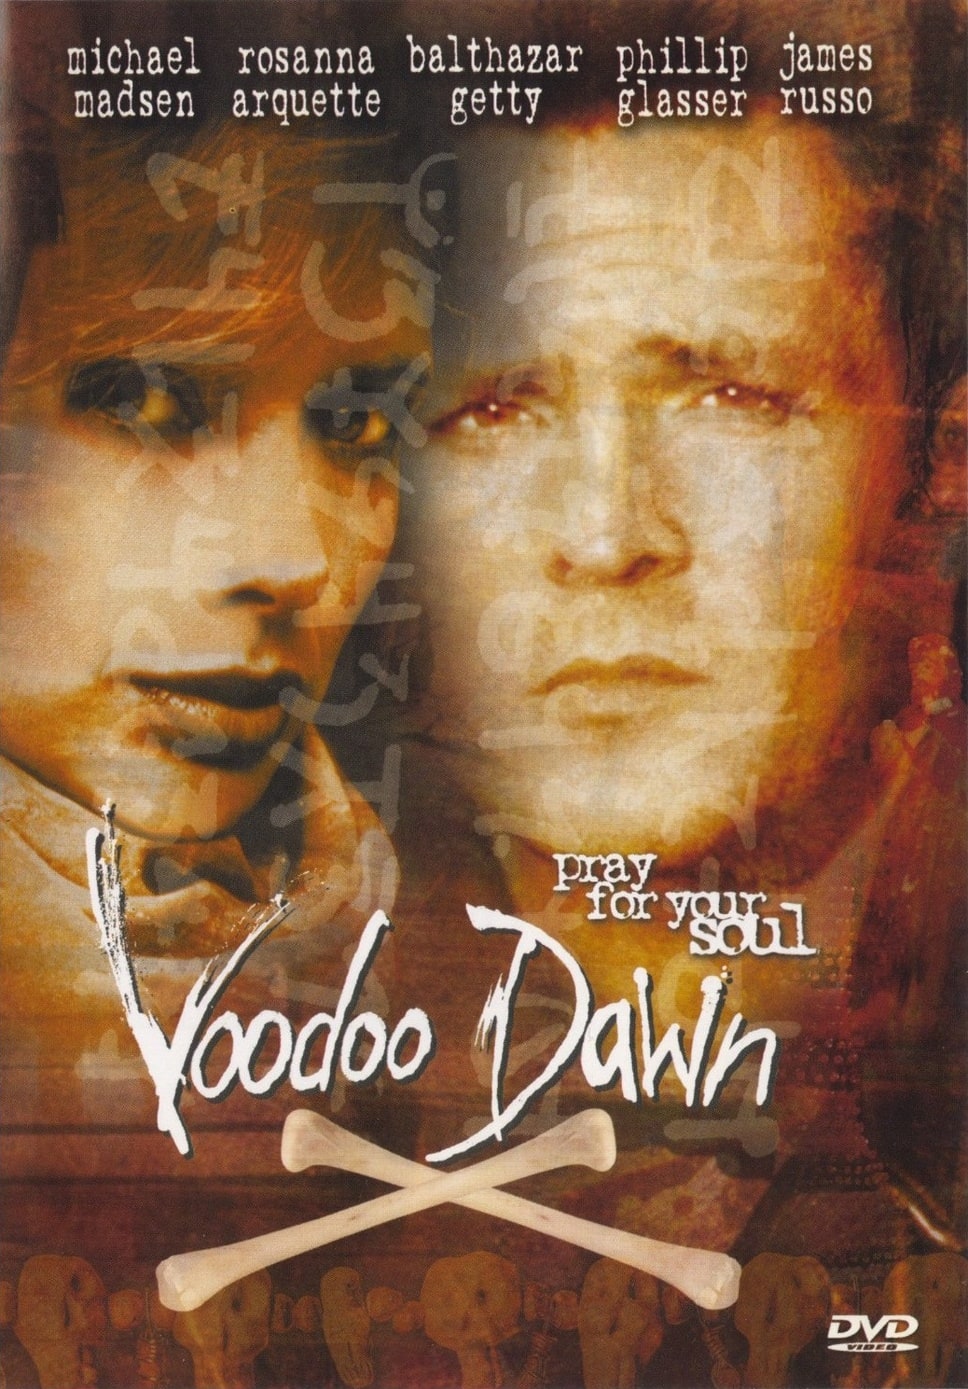 Voodoo Dawn Net Worth